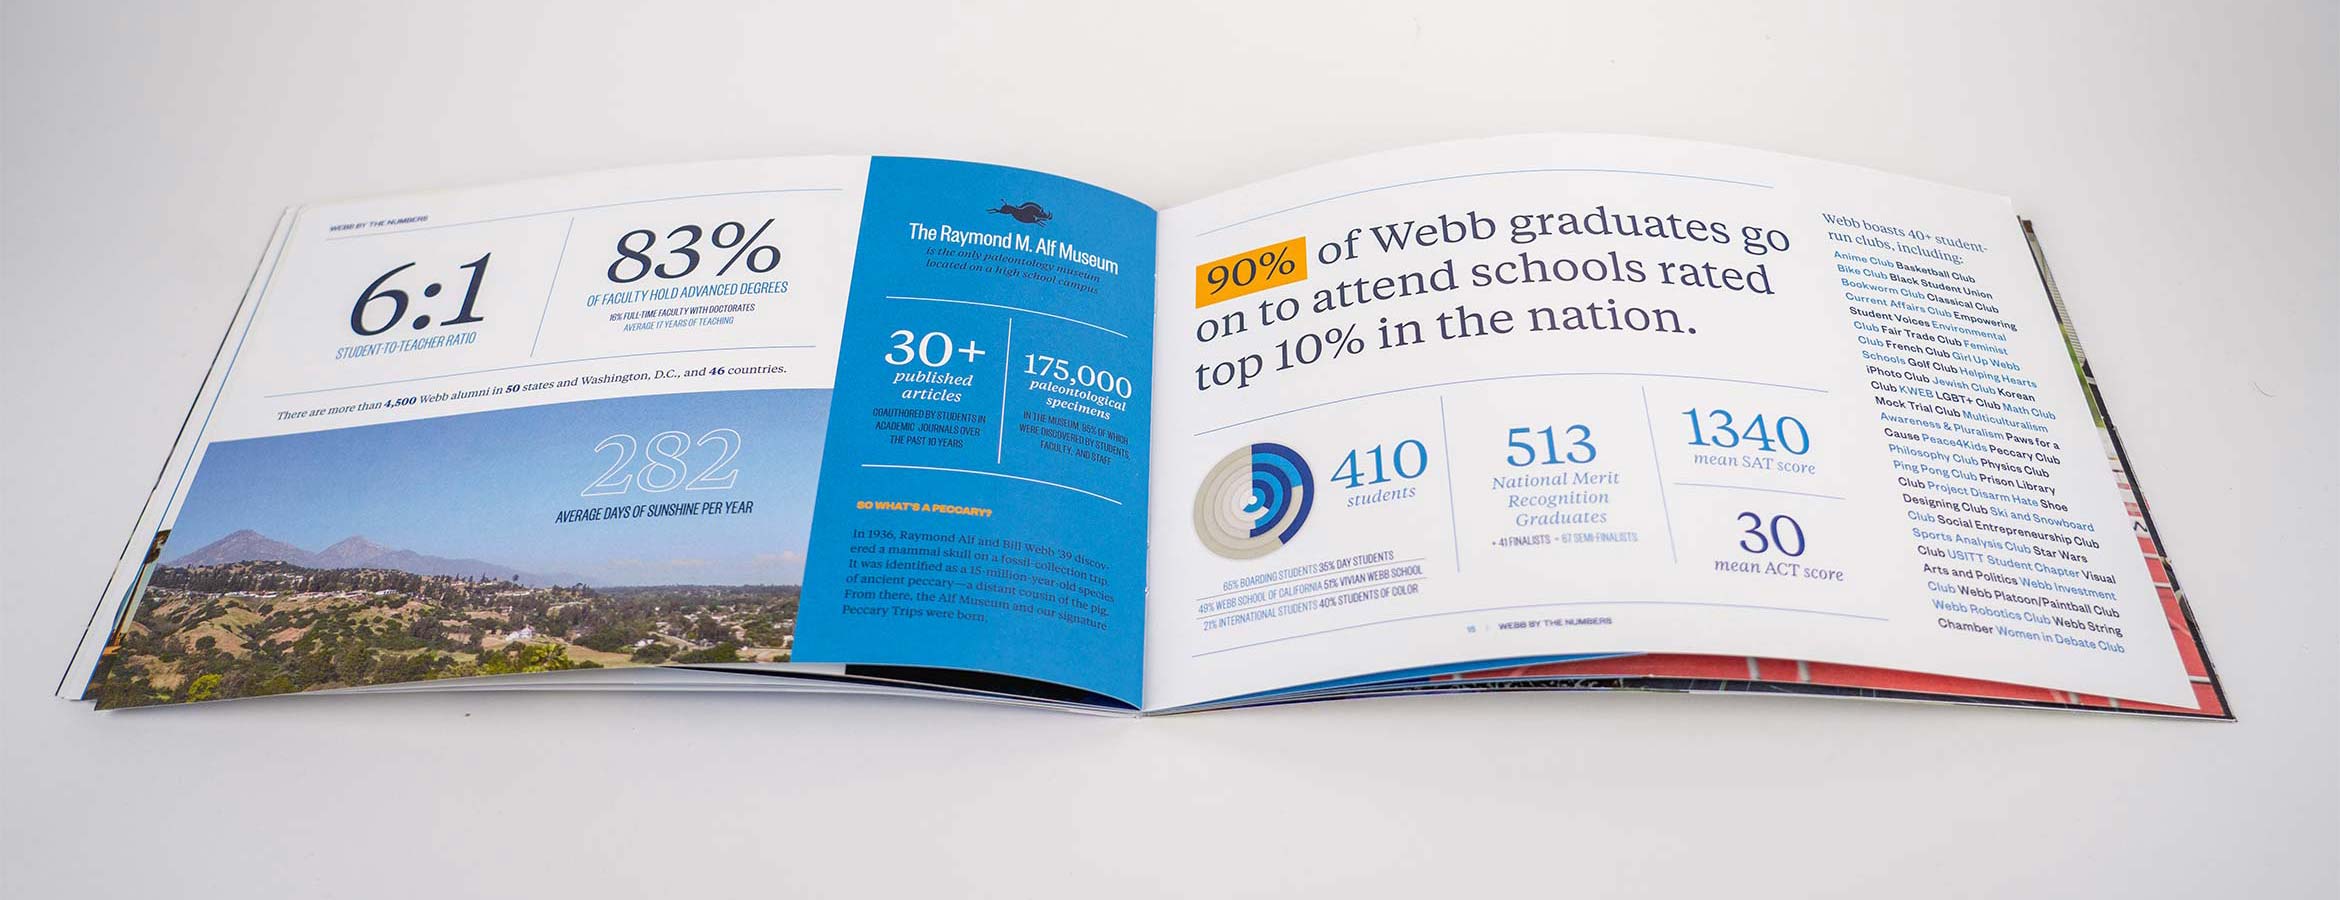 The Webb Schools Viewbook Spread B designed by Kilter